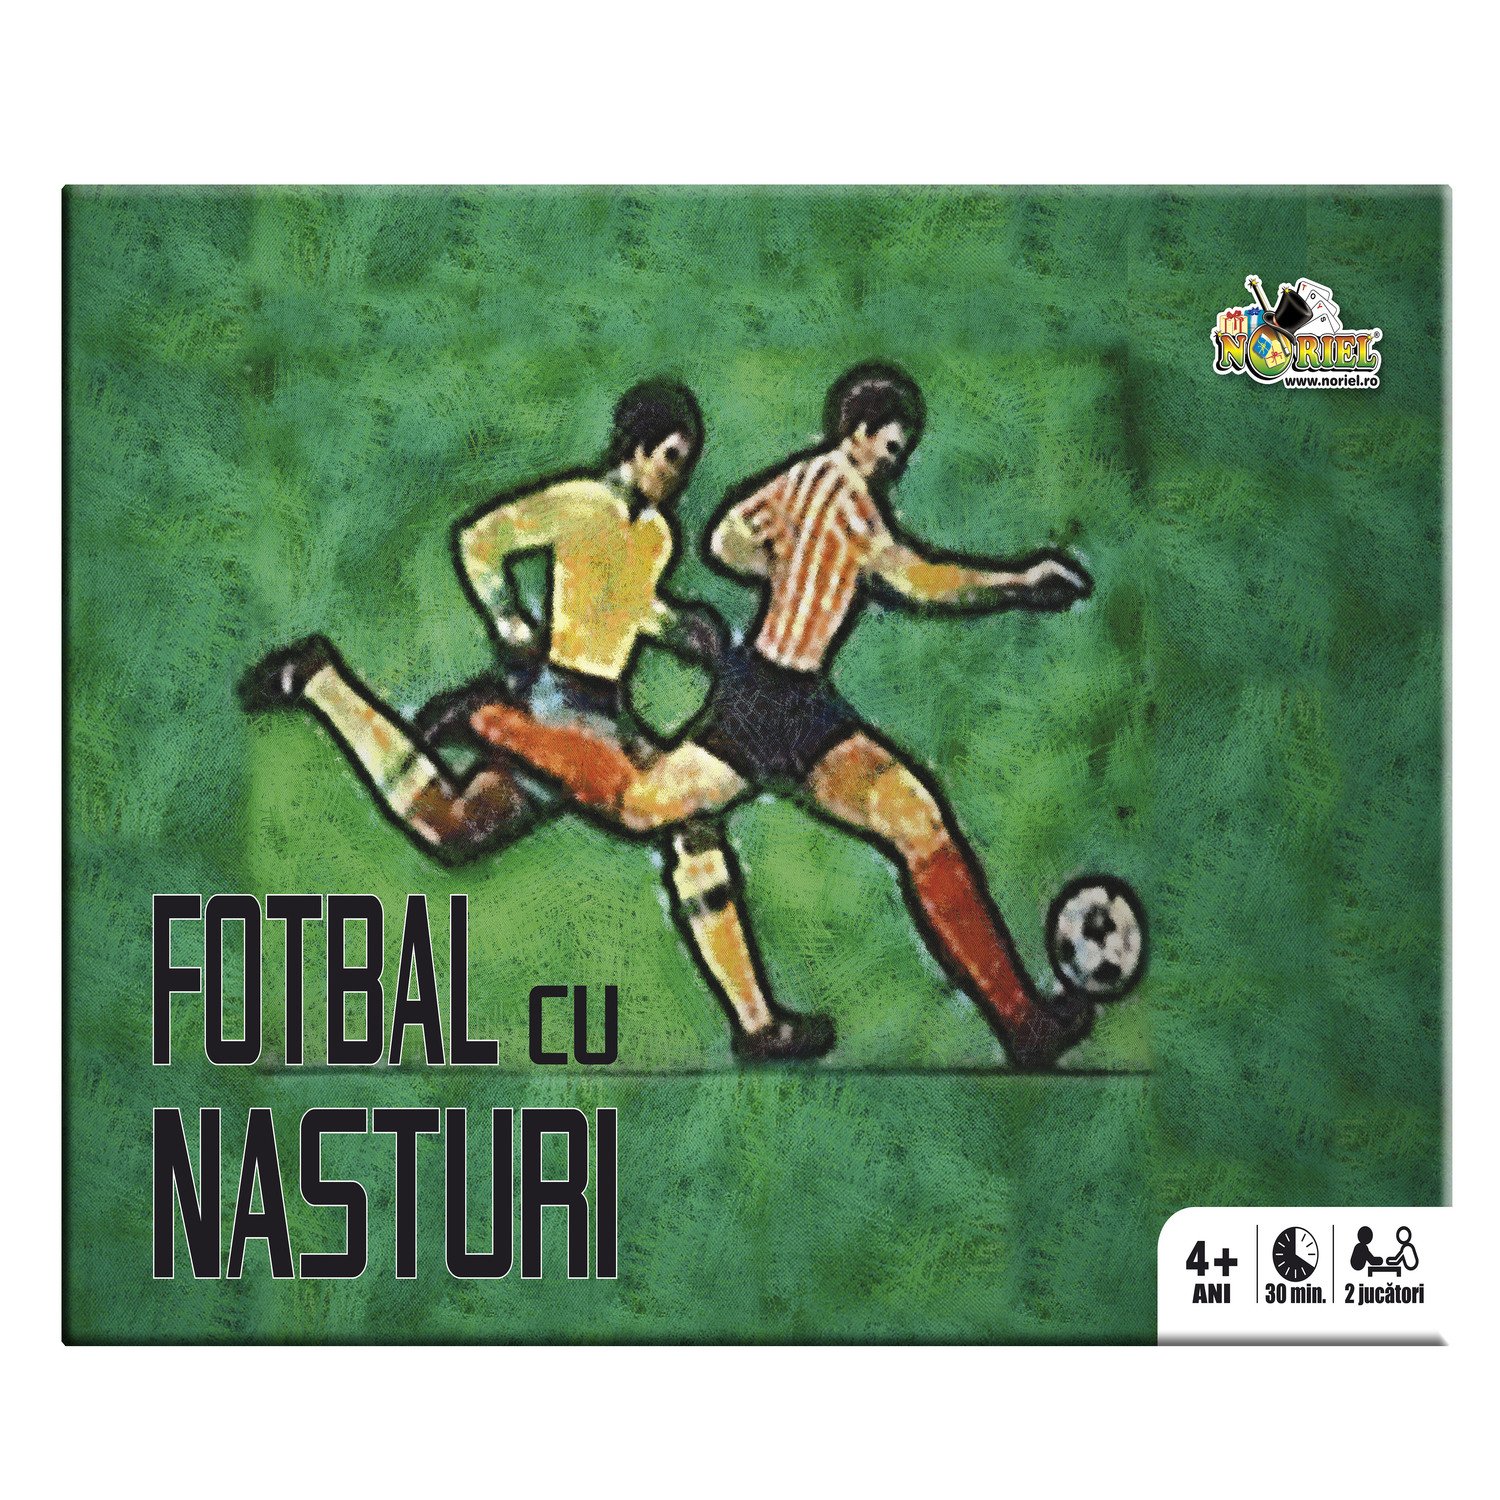 Joc Noriel – Fotbal cu nasturi Fotbal